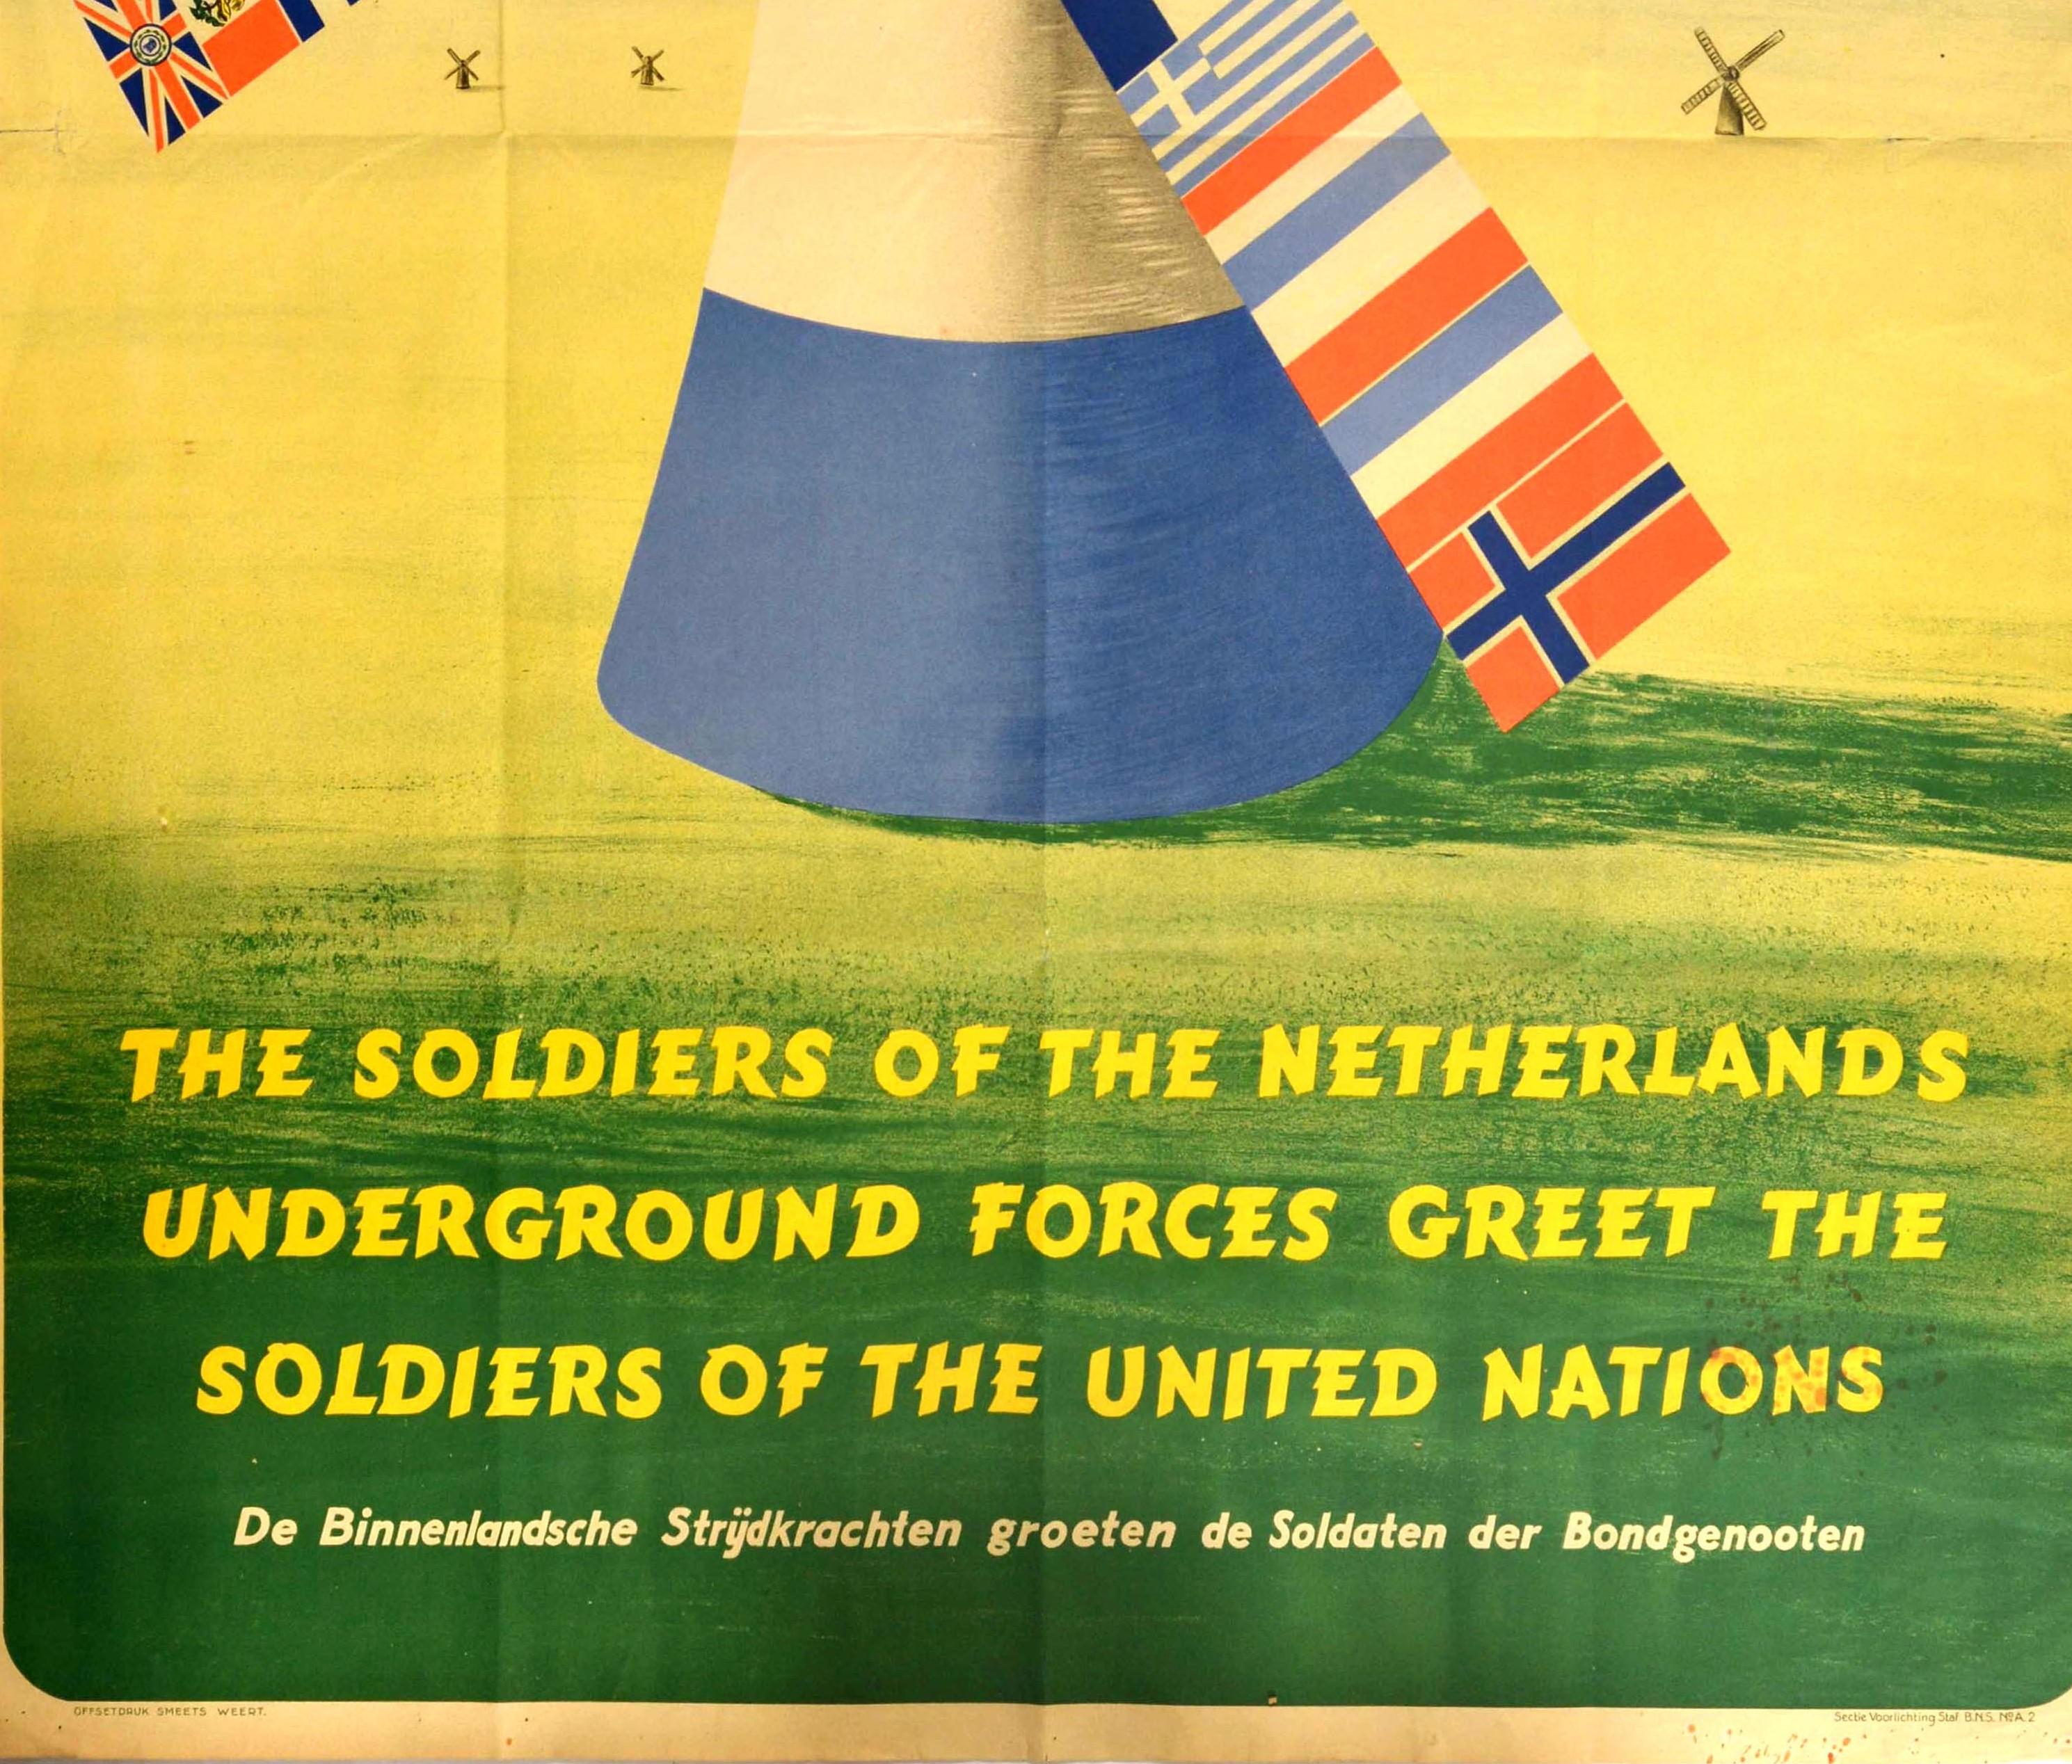 united nations propaganda poster